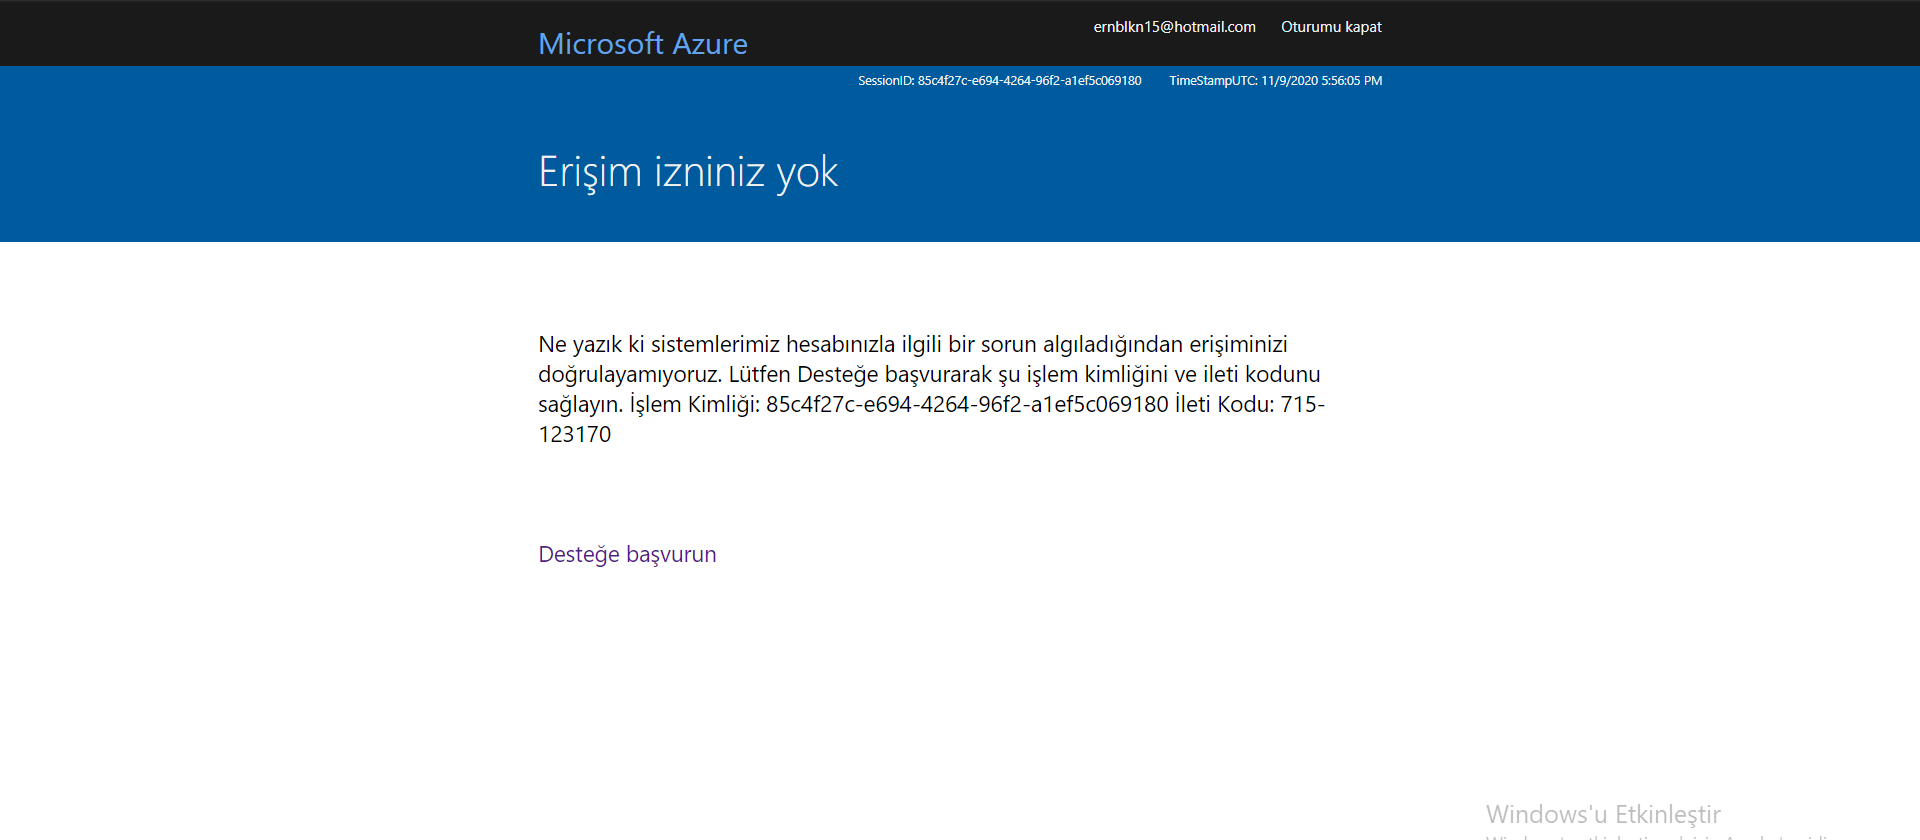 Microsoft Azure Sign Up b1f678b6-a59b-41c2-9fe1-7bbff977fc37?upload=true.png